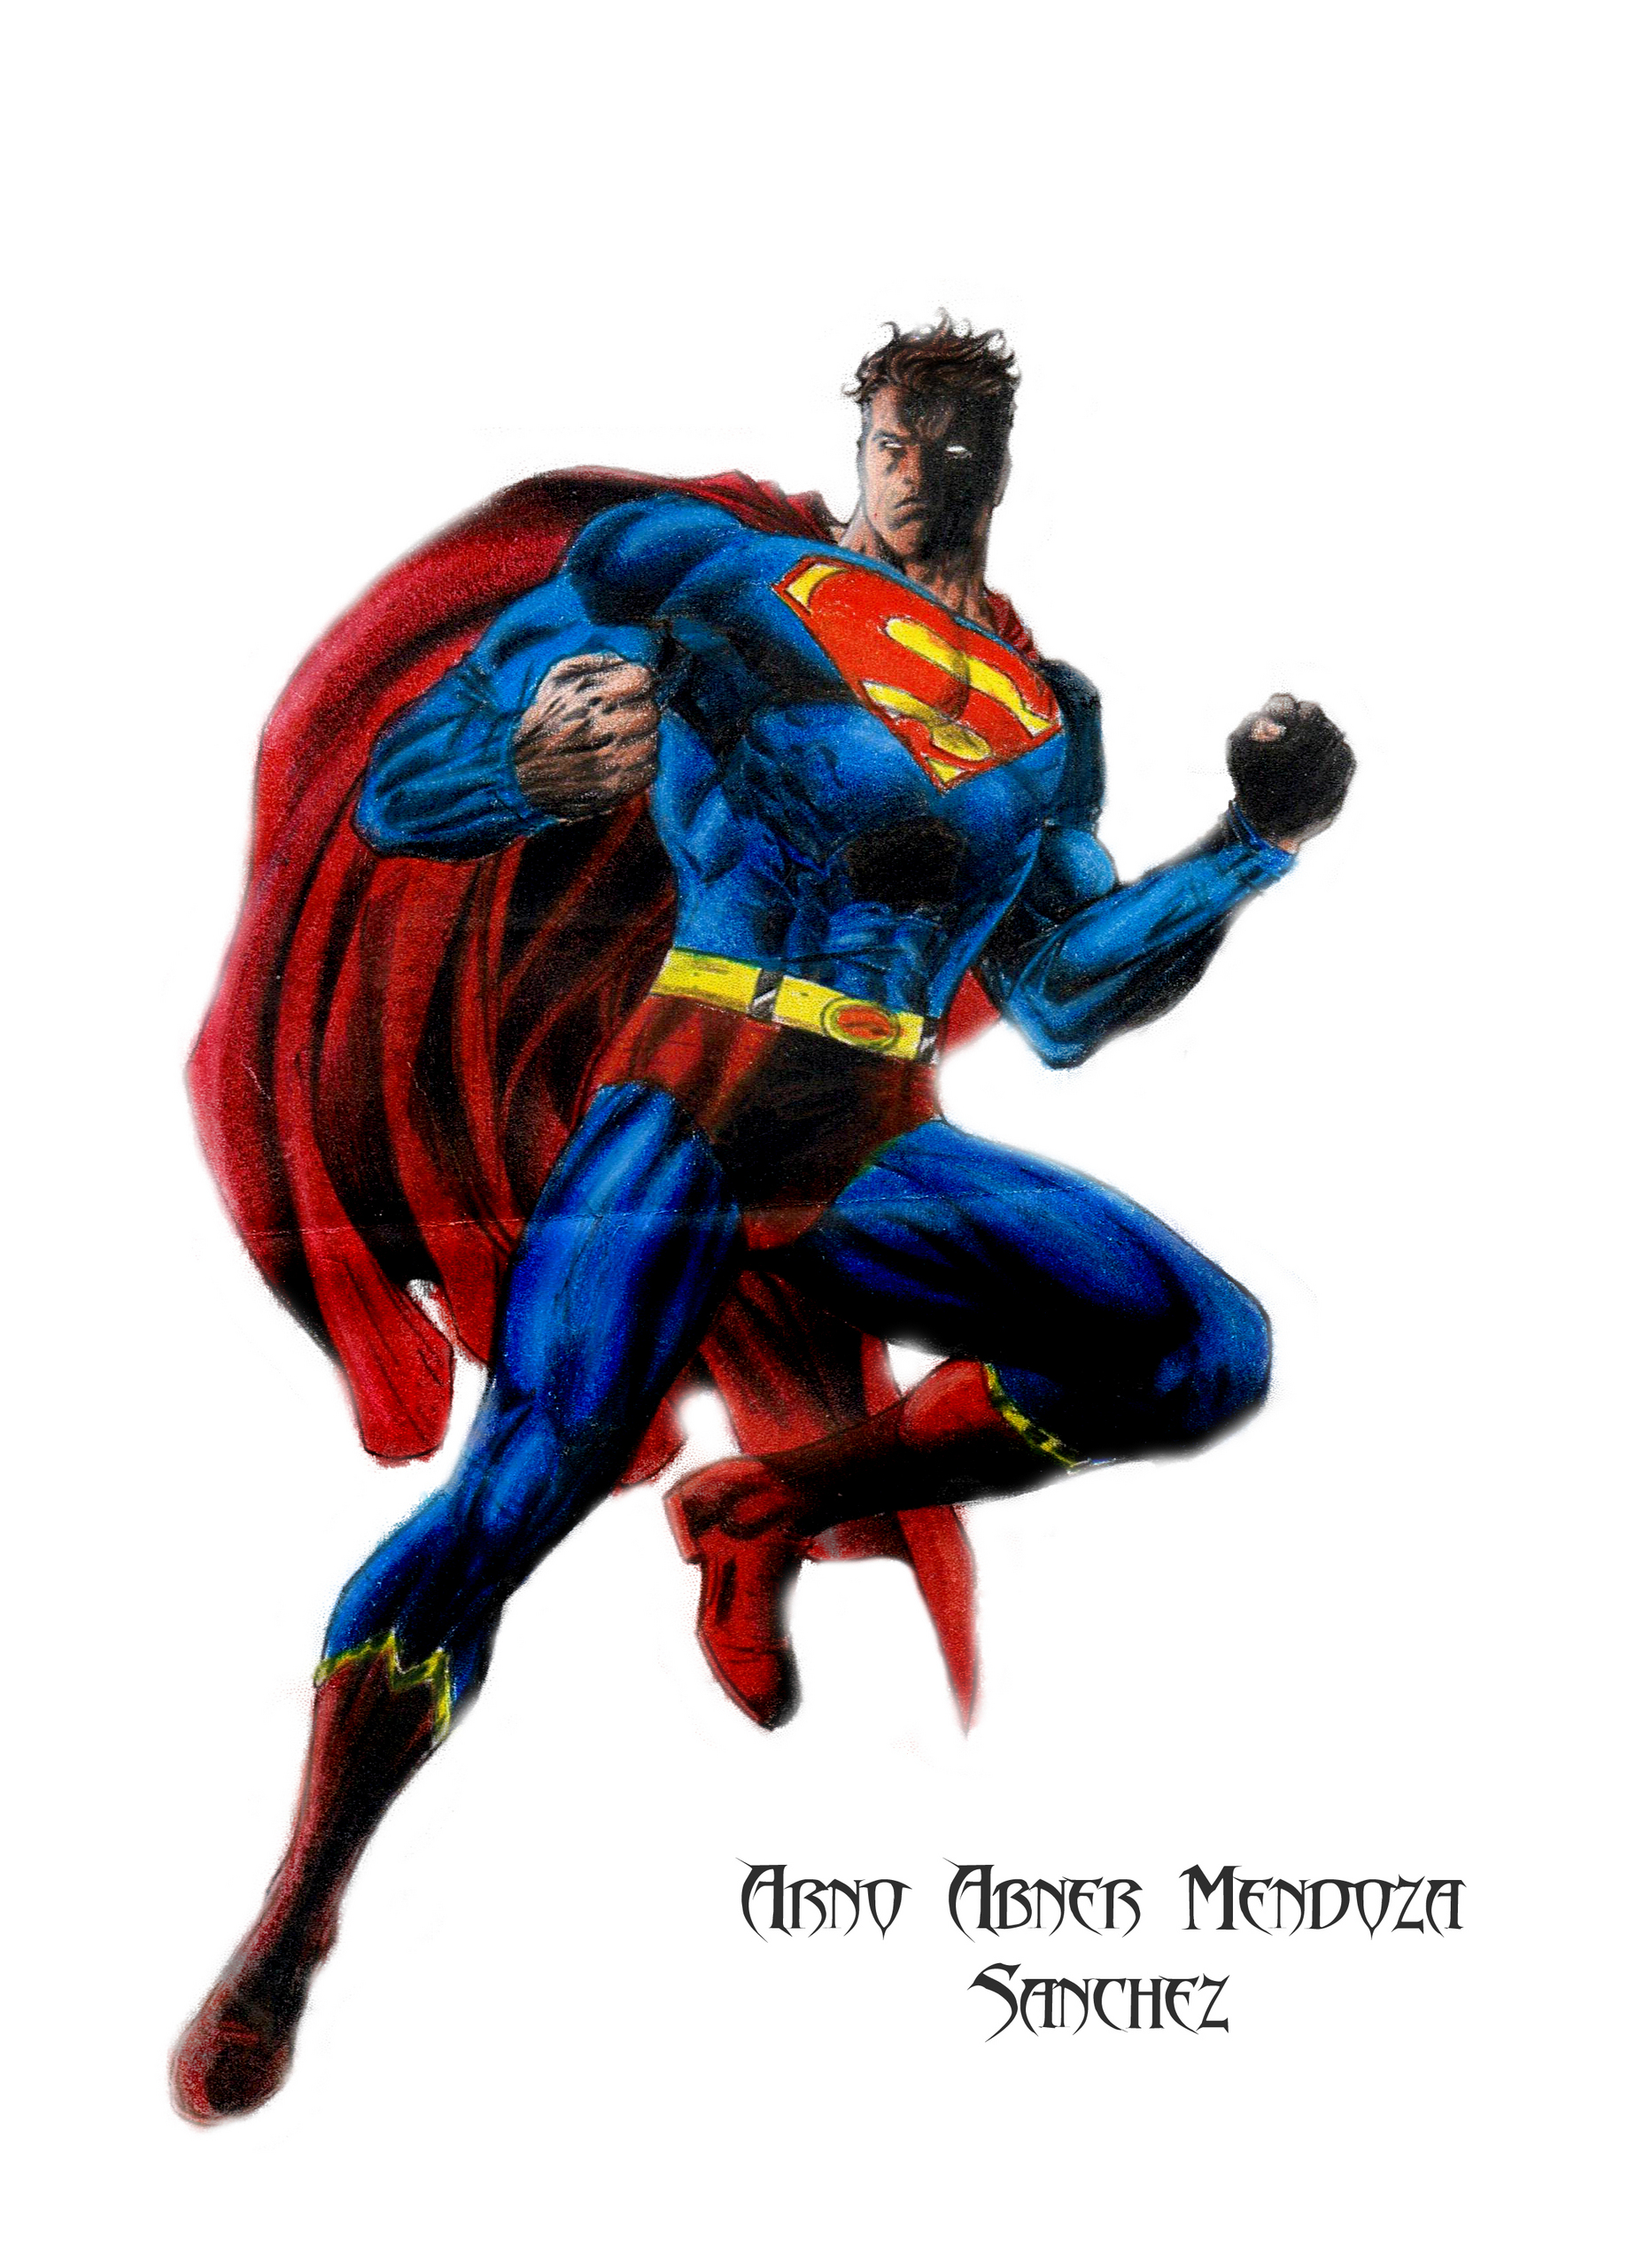 Superman - Photos